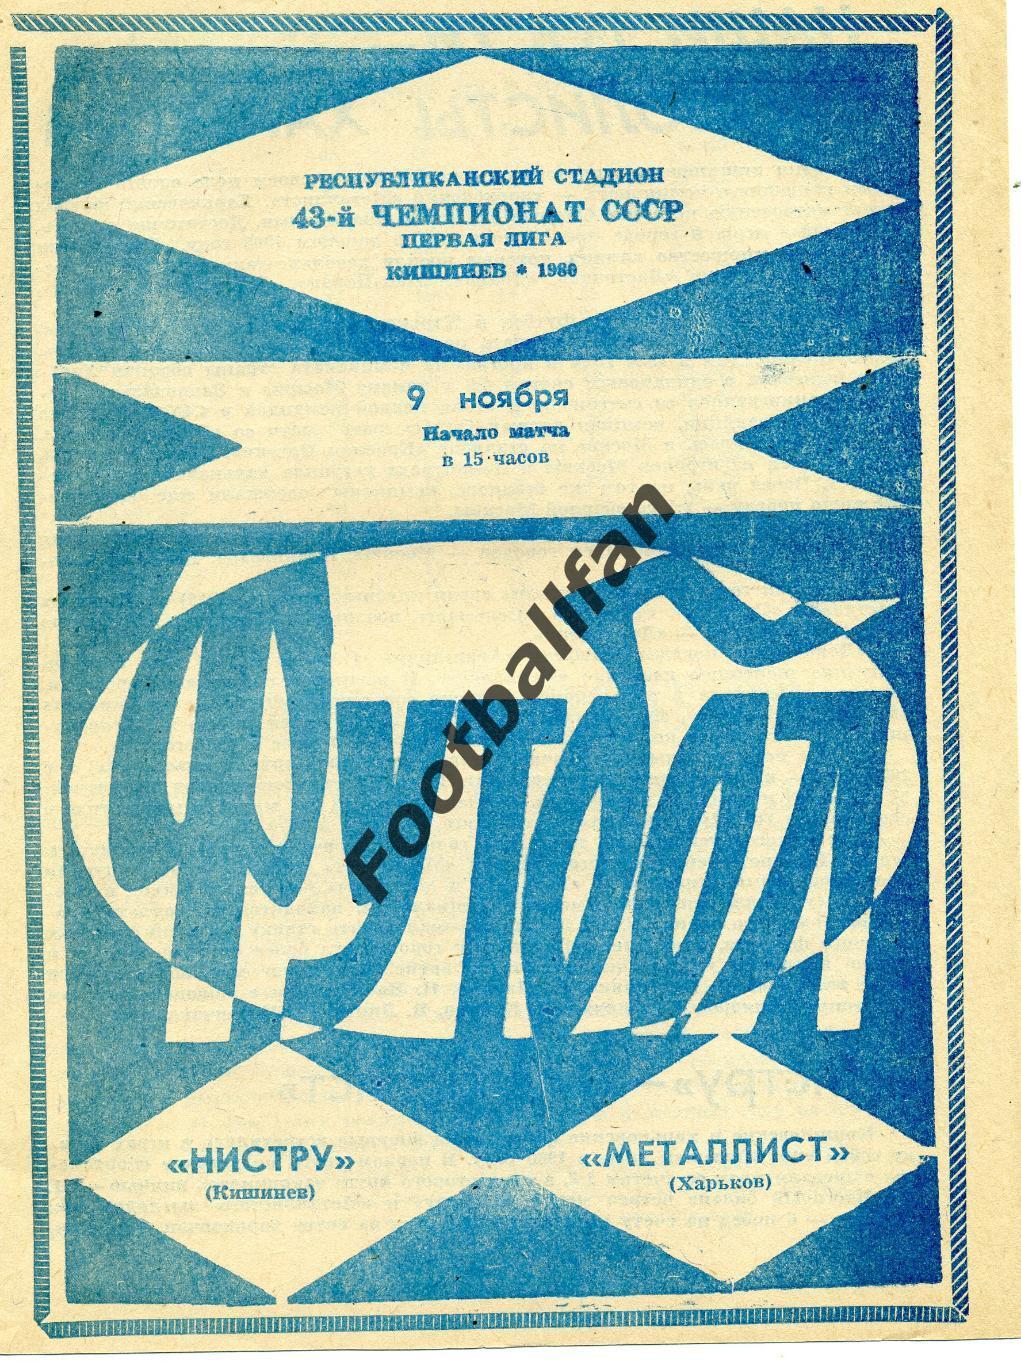 Нистру Кишинев - Металлист Харьков 09.11.1980